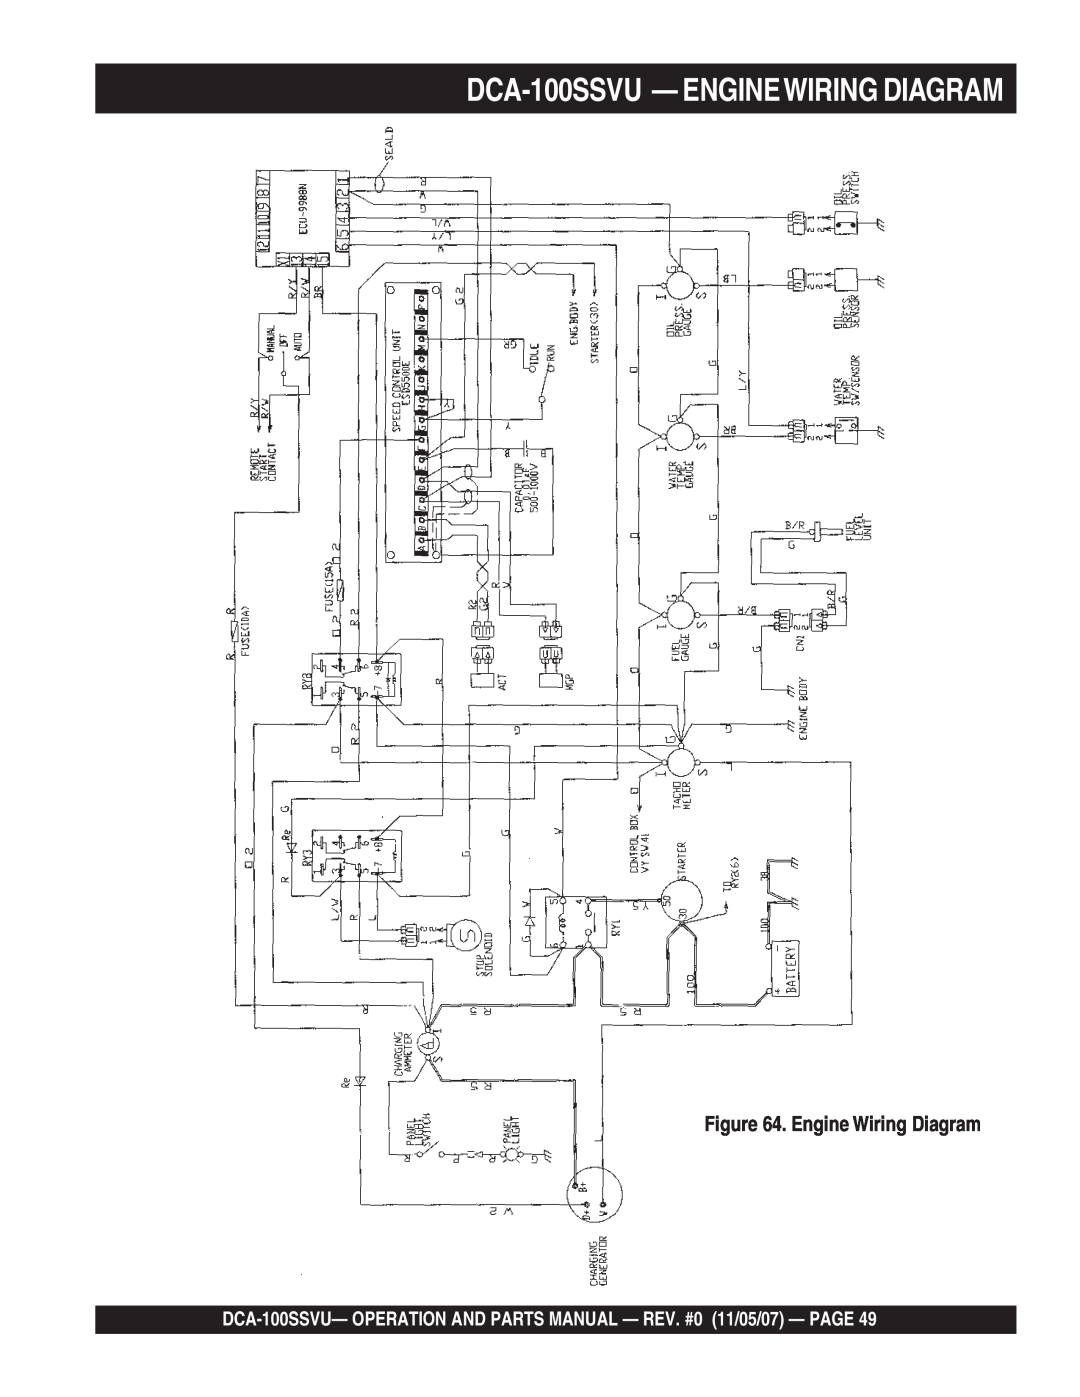 Multiquip operation manual DCA-100SSVU— ENGINEWIRING DIAGRAM, Engine Wiring Diagram 